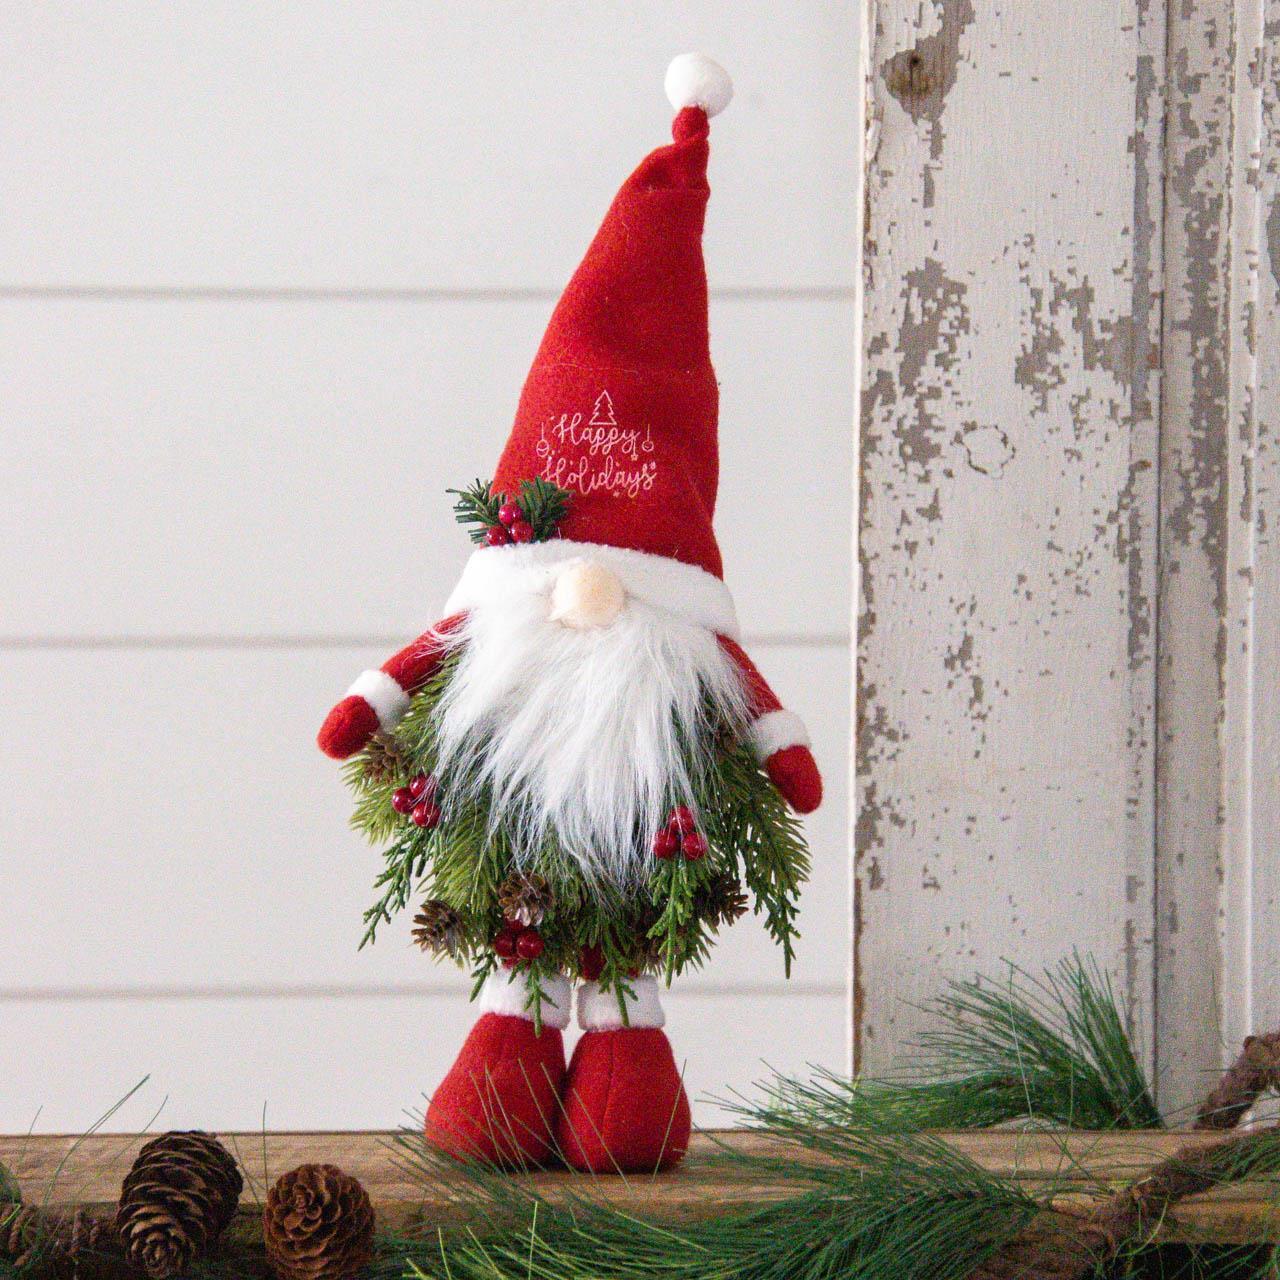 Happy Holidays Evergreen Body Gnome Figure